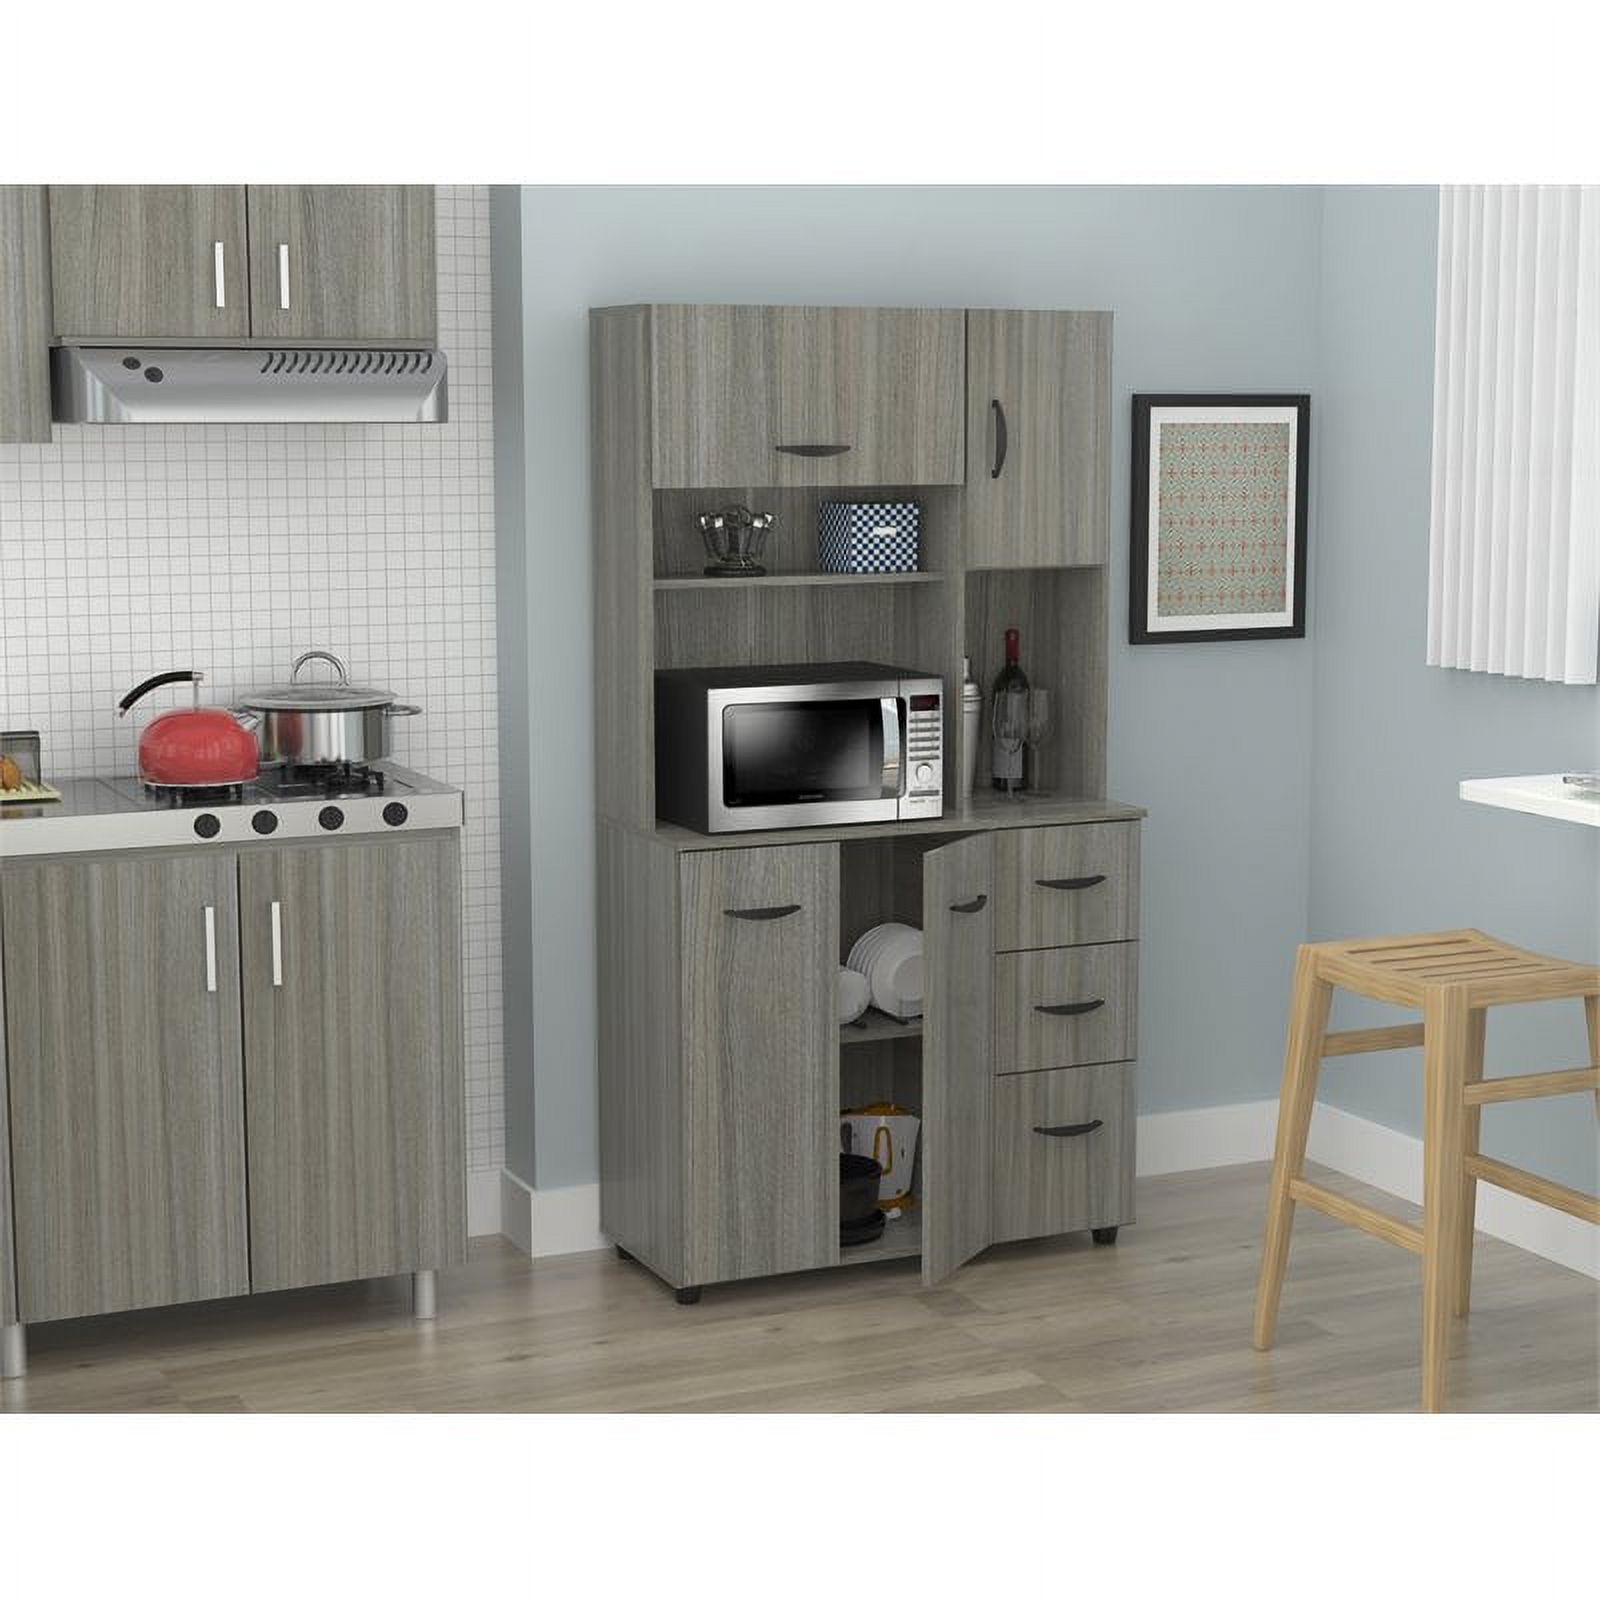 Inval Laminate Kitchen Microwave Storage Cabinet, Smoke Oak - image 2 of 8